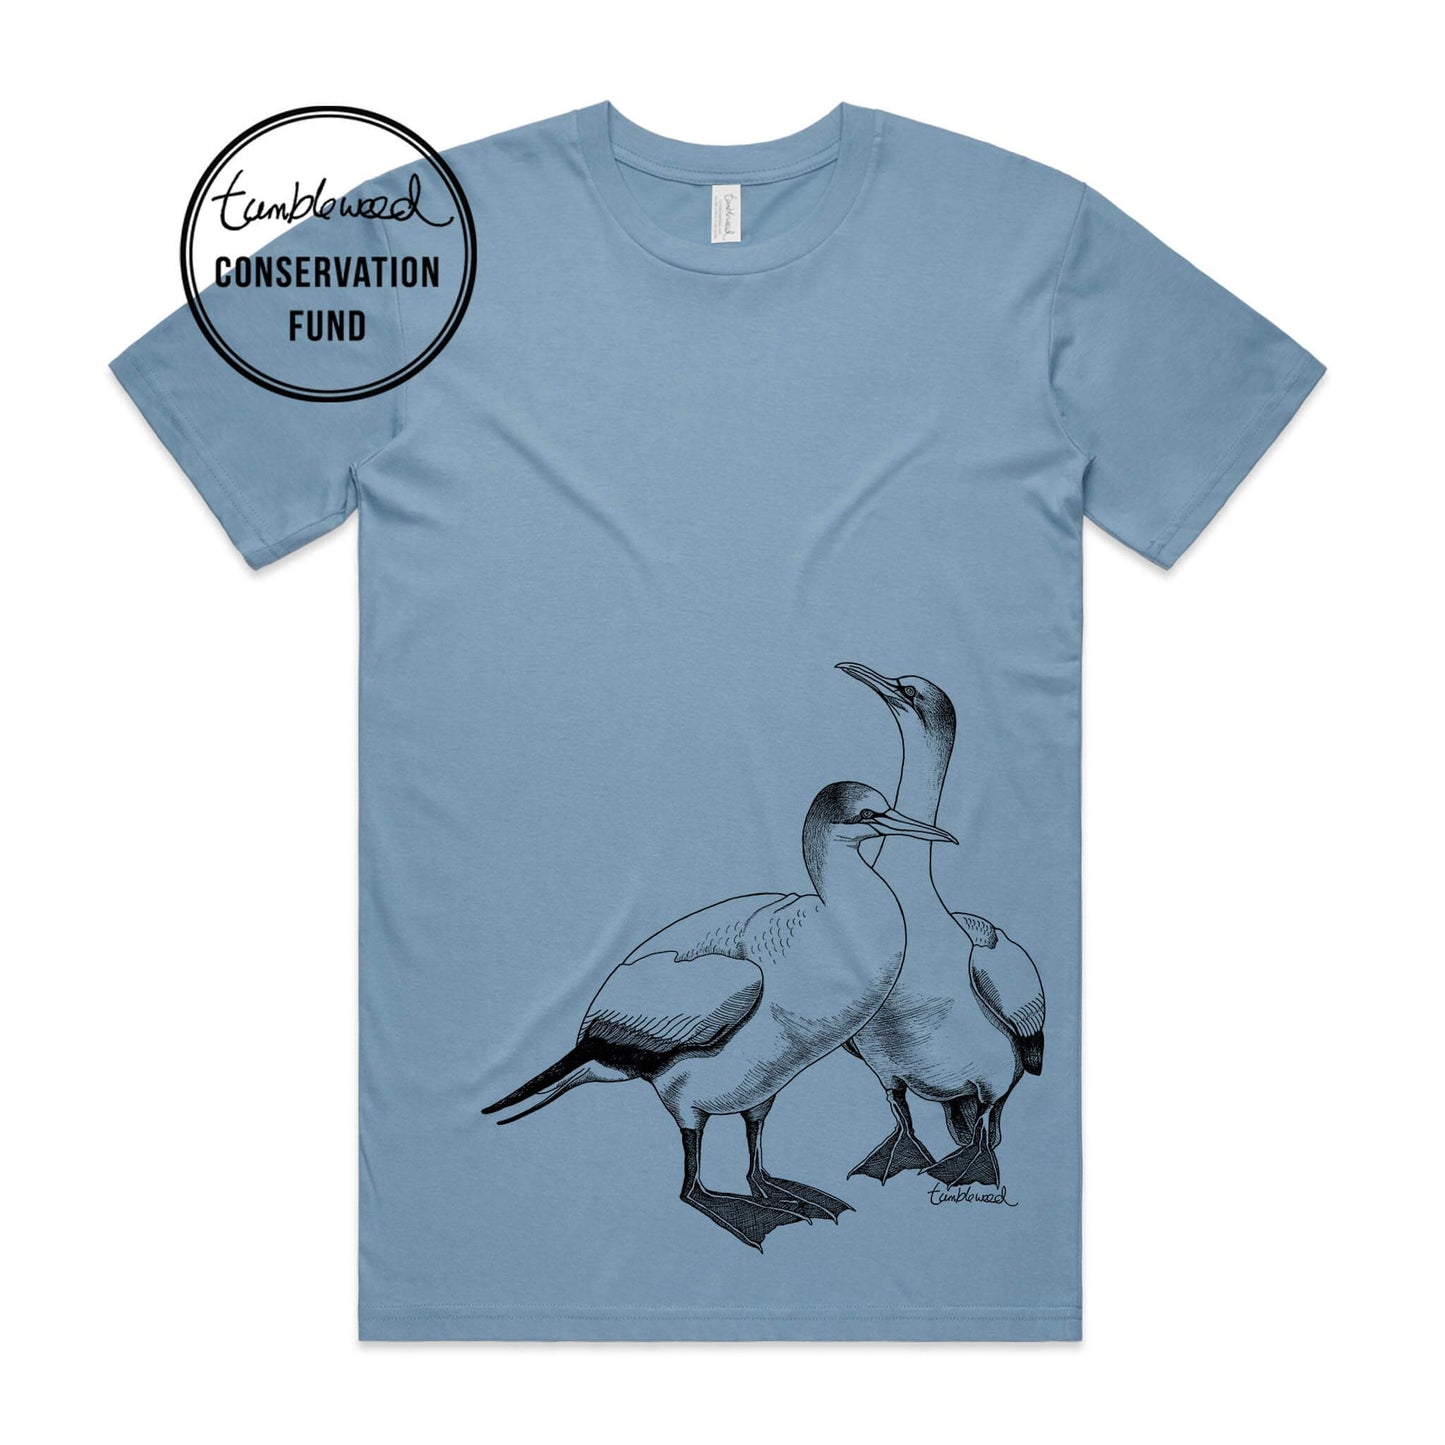 Sage, female t-shirt featuring a screen printed gannet design.